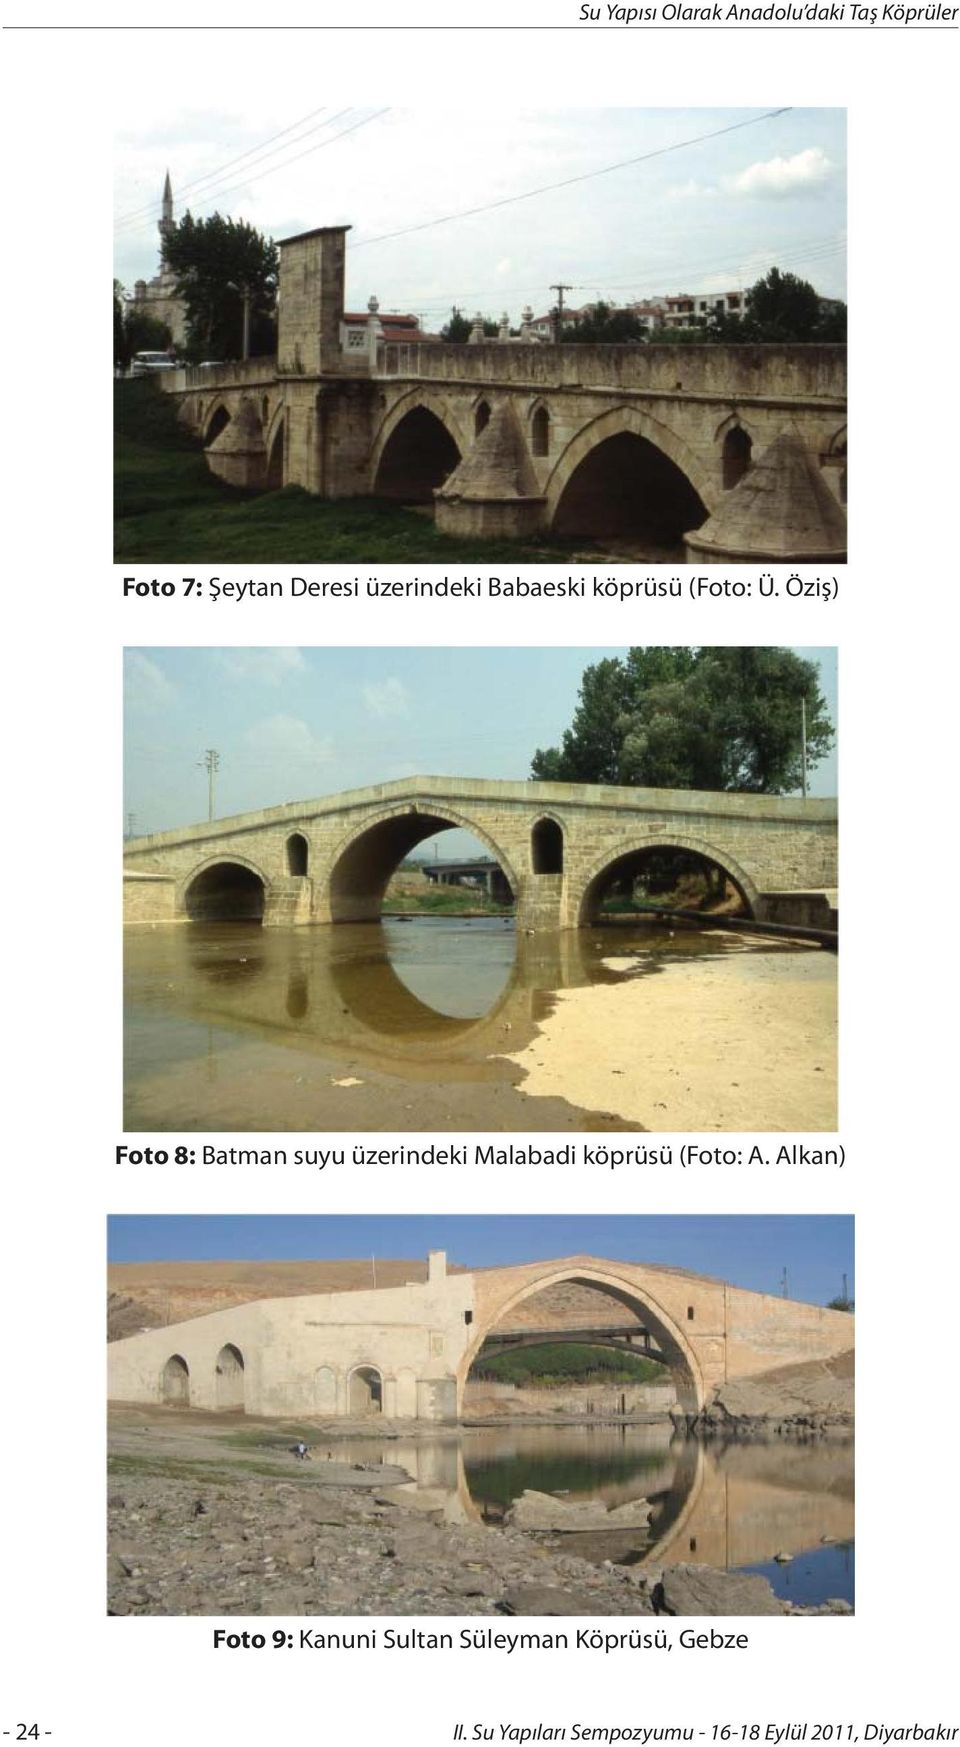 Öziş) Foto 8: Batman suyu üzerindeki Malabadi köprüsü (Foto: A.